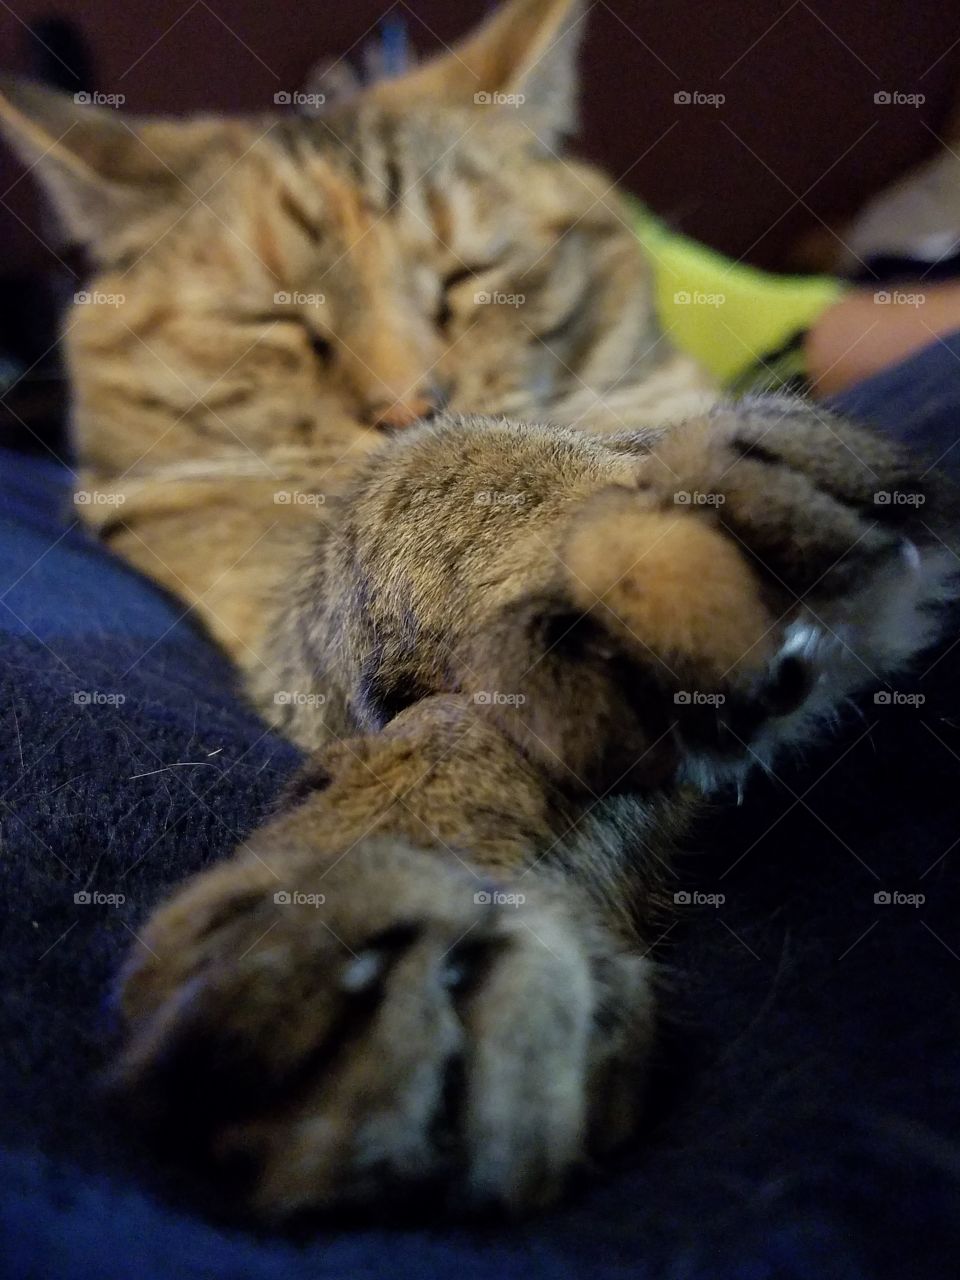 Kitty fell asleep on her favorite blanket.